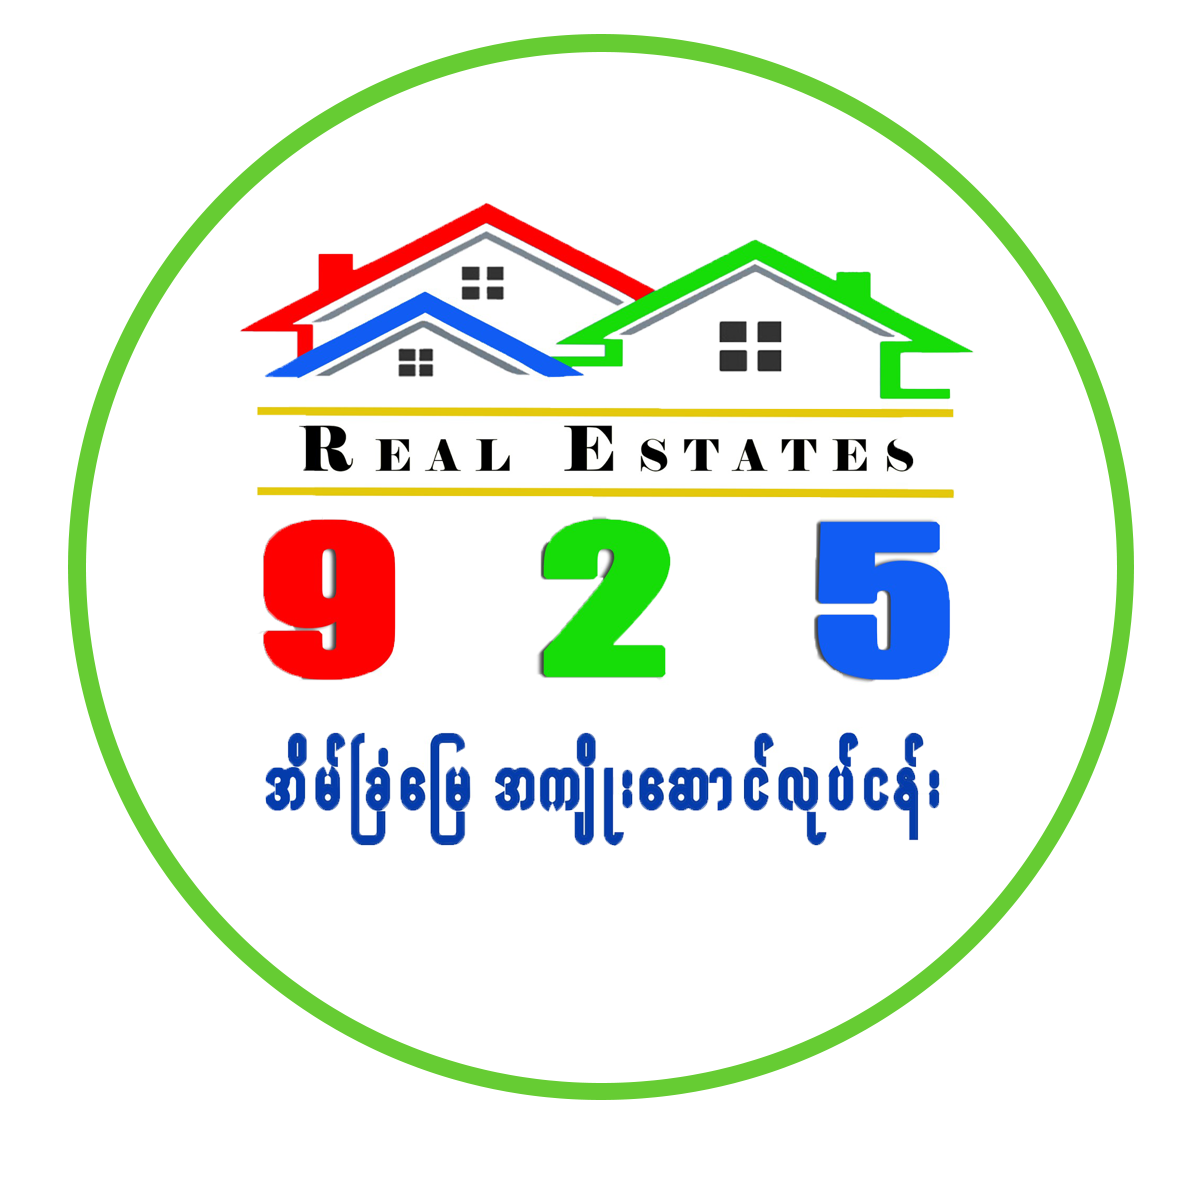 925 Real Estate